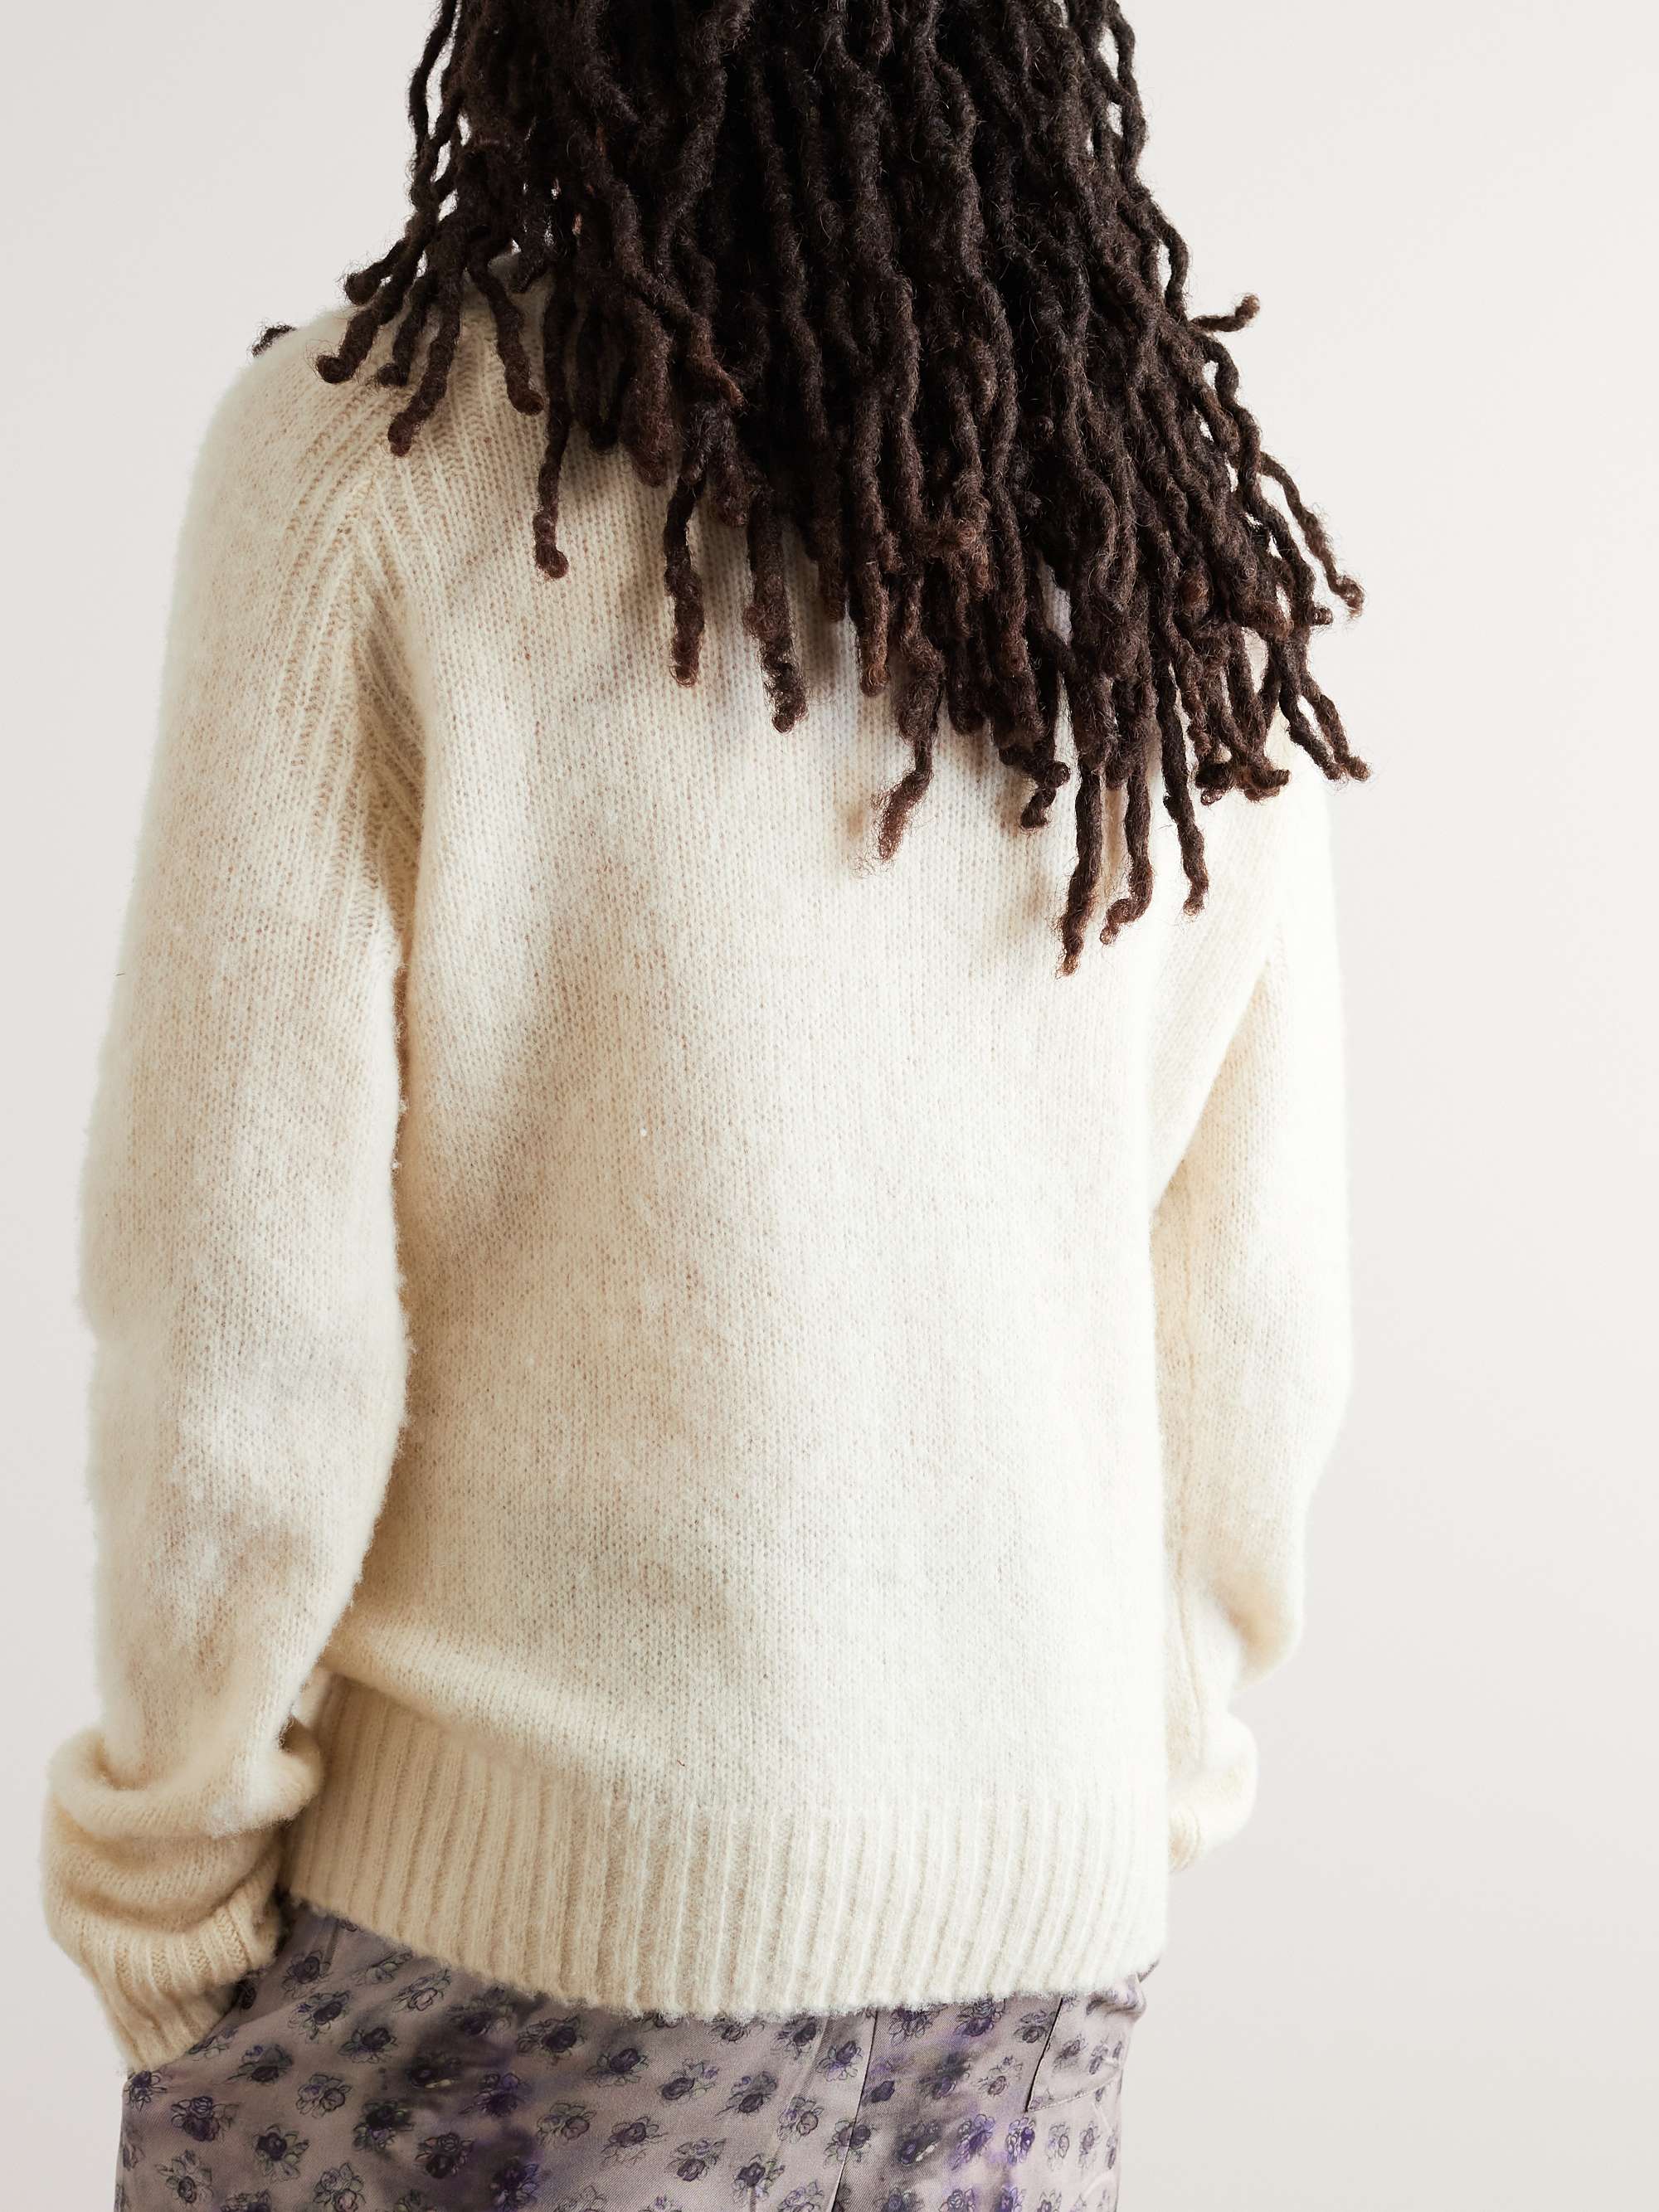 ACNE STUDIOS Wool Sweater